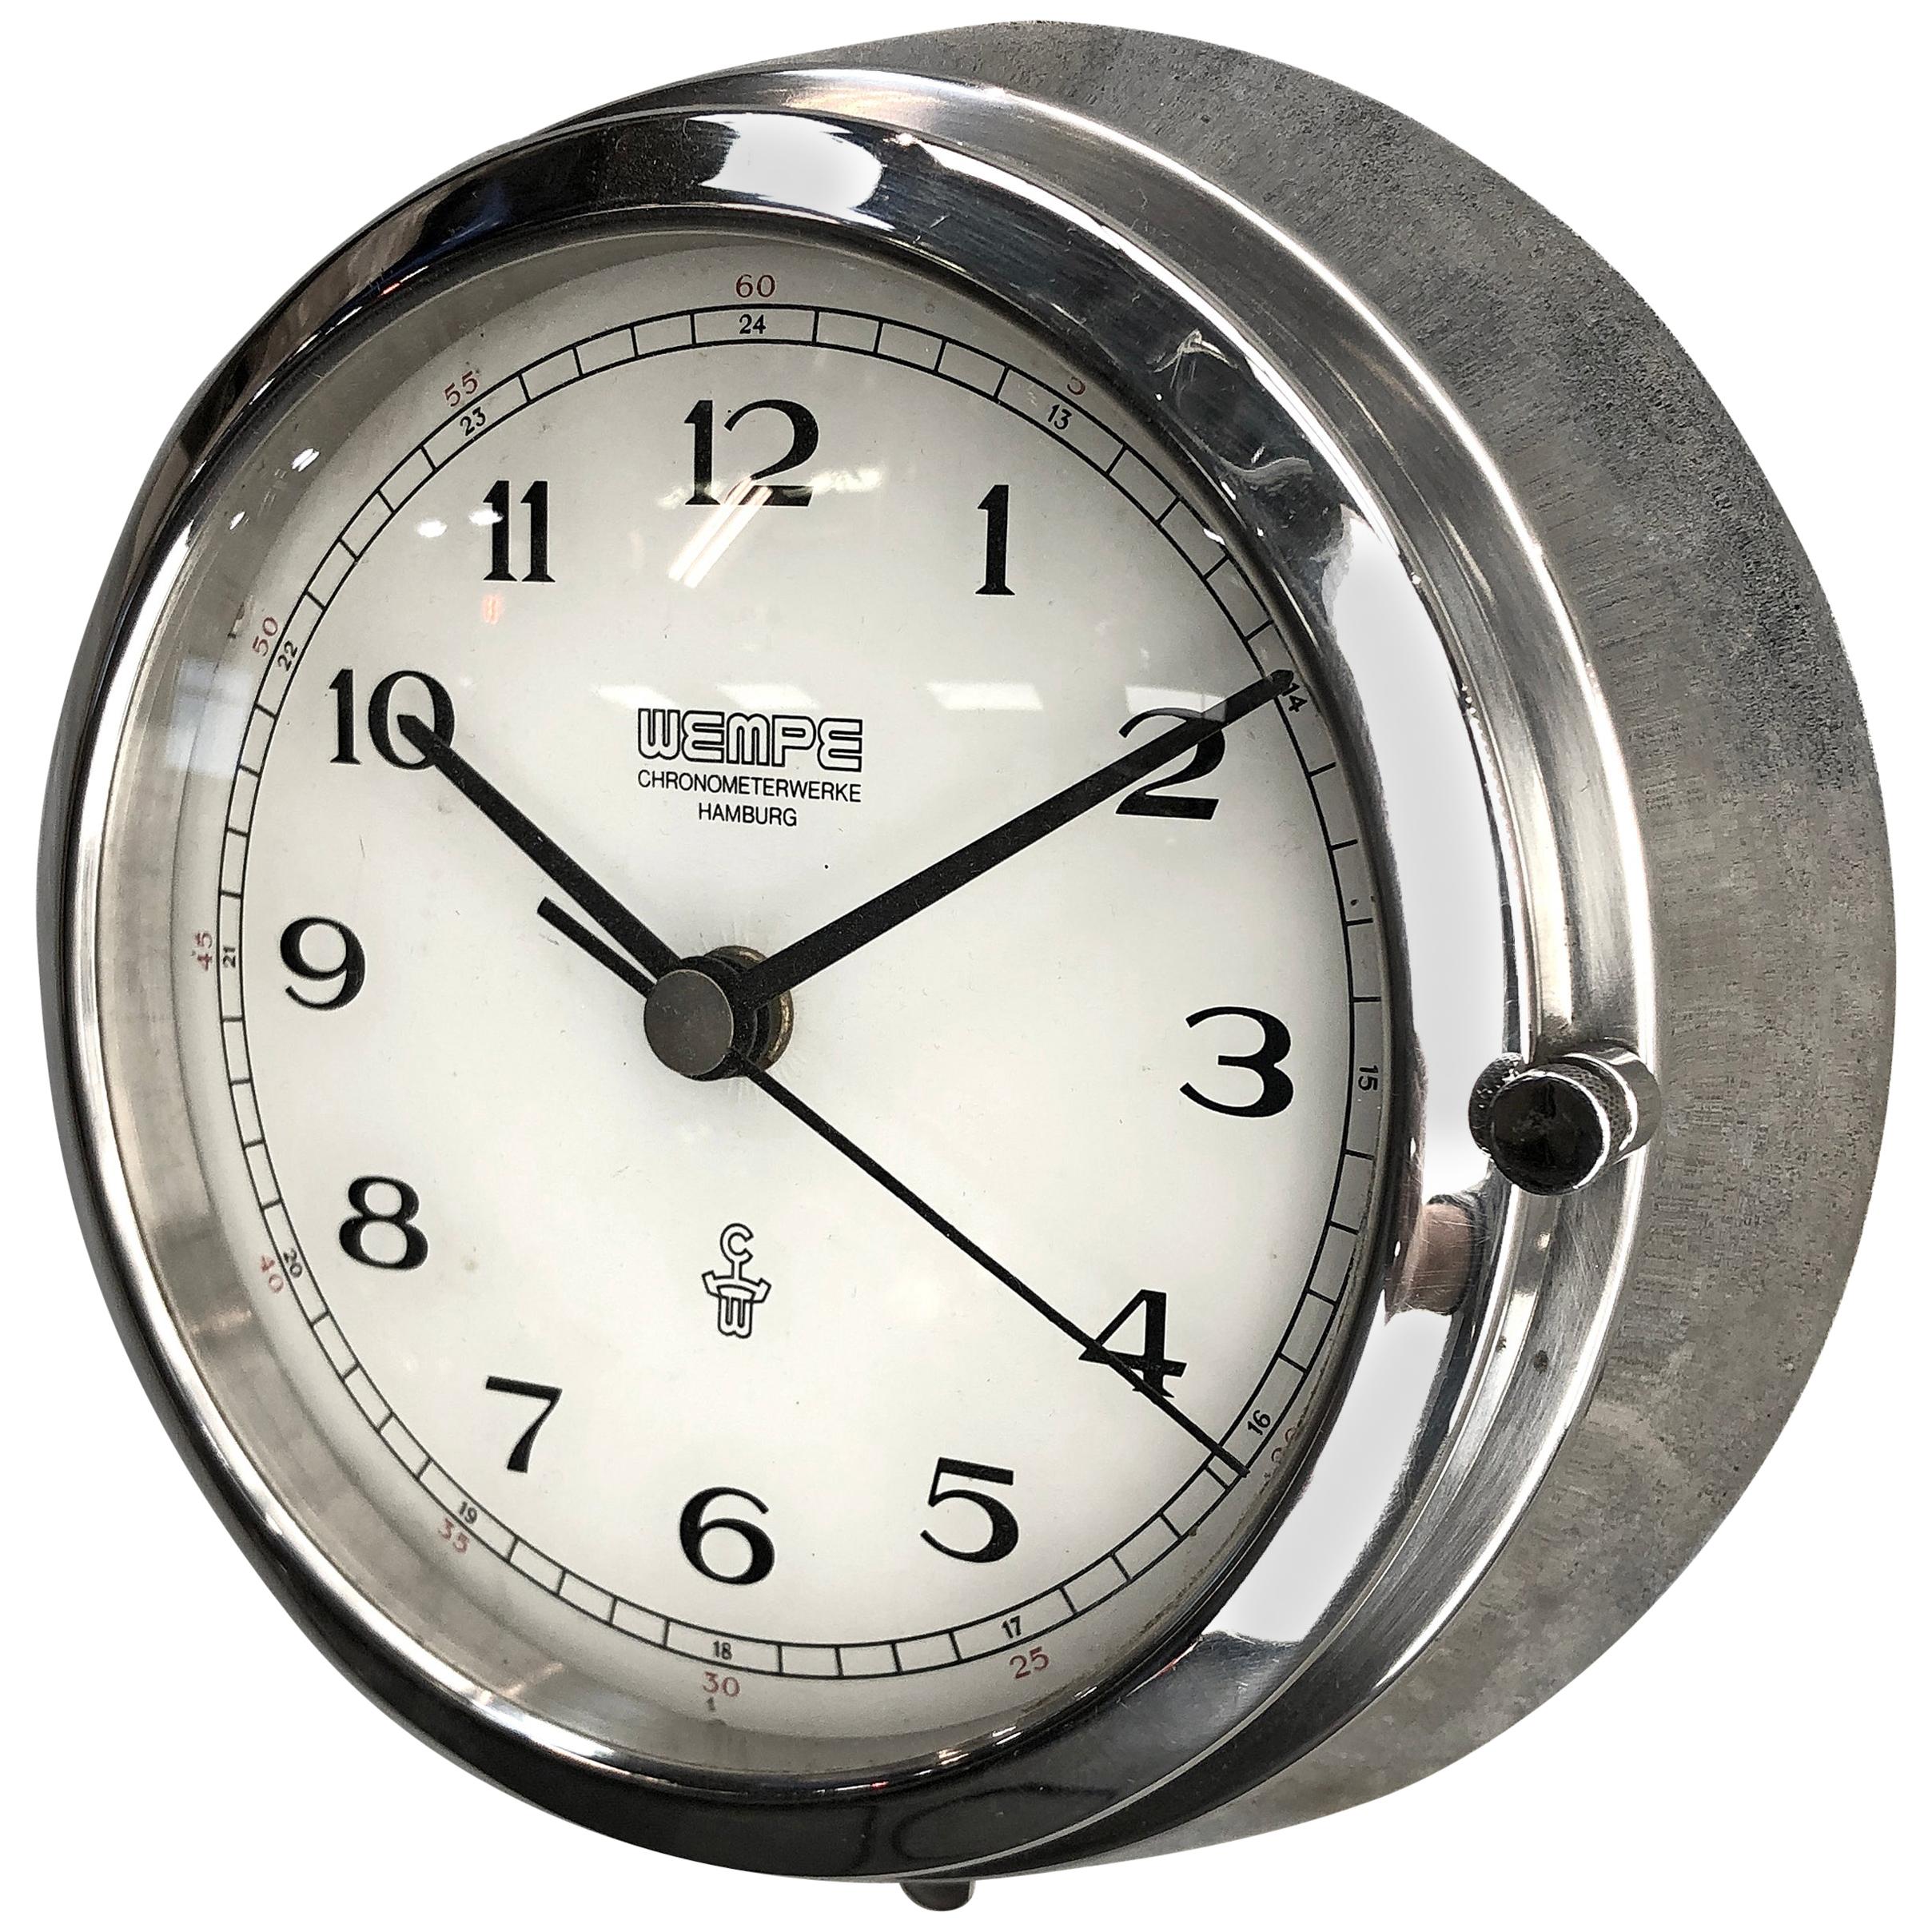 1980s German Chrome Circular Chronometer Quartz Wall Clock by Wempe